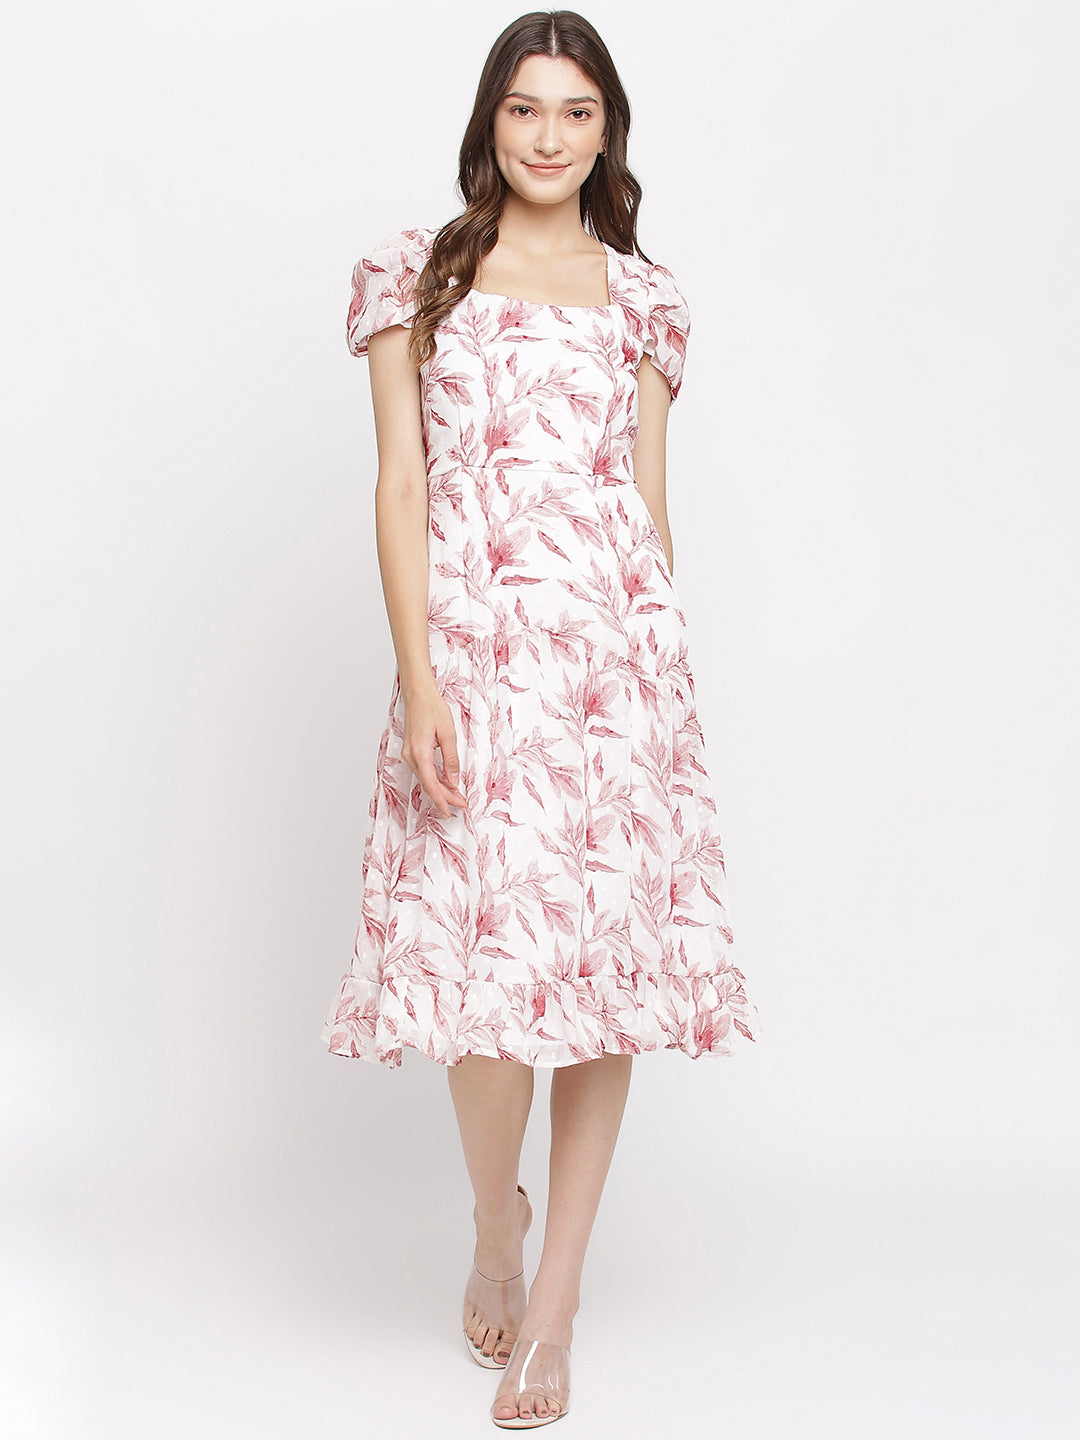 Maroon Half Sleeve Printed A-Line Dress For Women & Girls